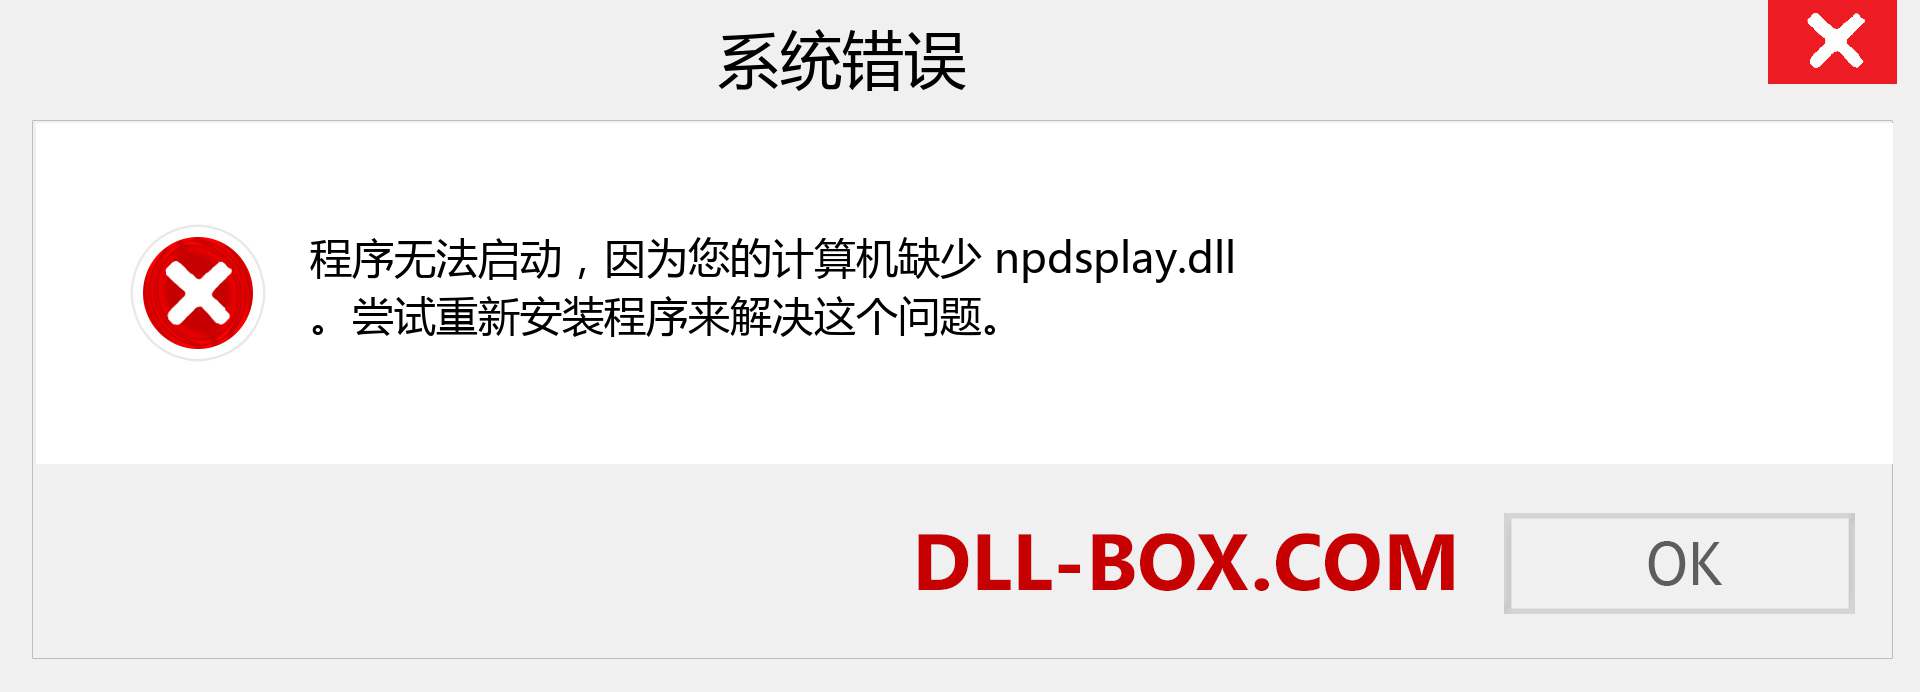 npdsplay.dll 文件丢失？。 适用于 Windows 7、8、10 的下载 - 修复 Windows、照片、图像上的 npdsplay dll 丢失错误